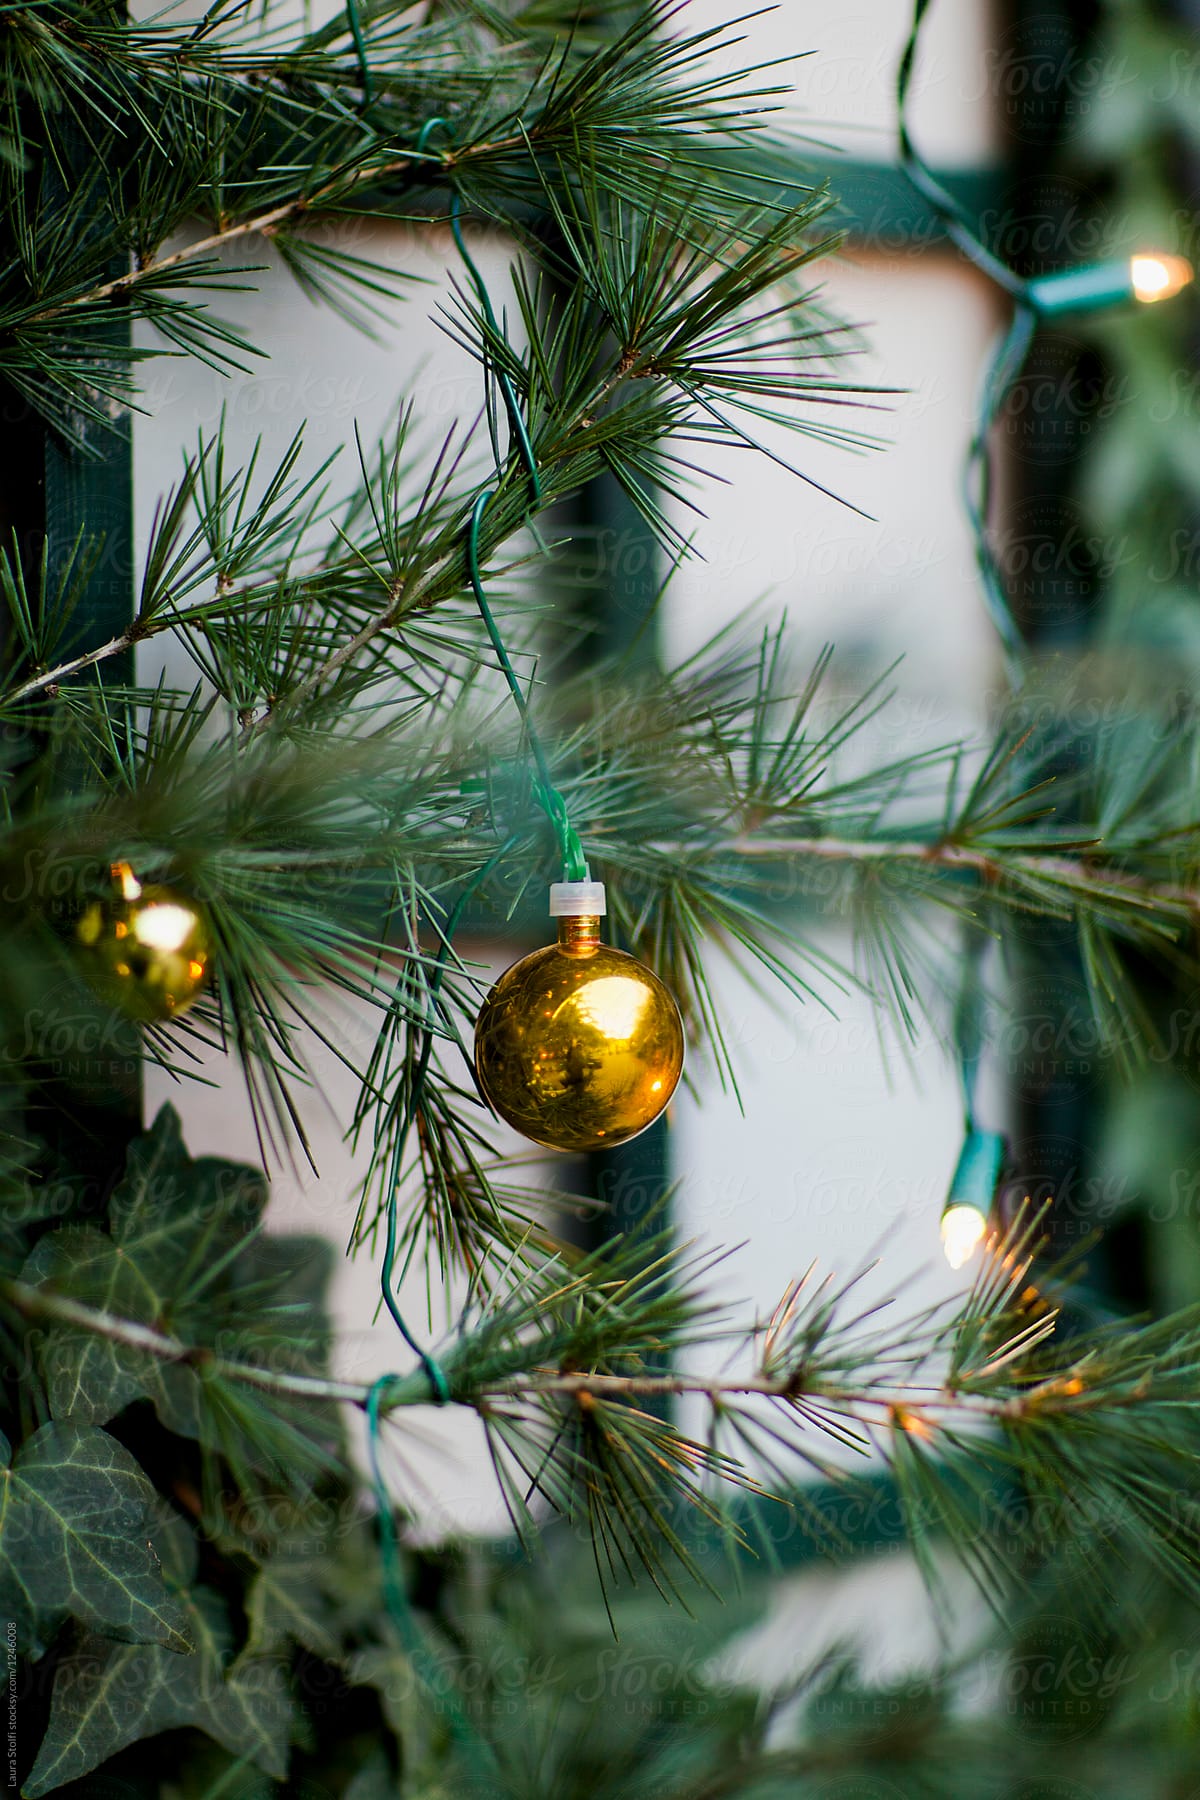 Golden balls and Christmas lights